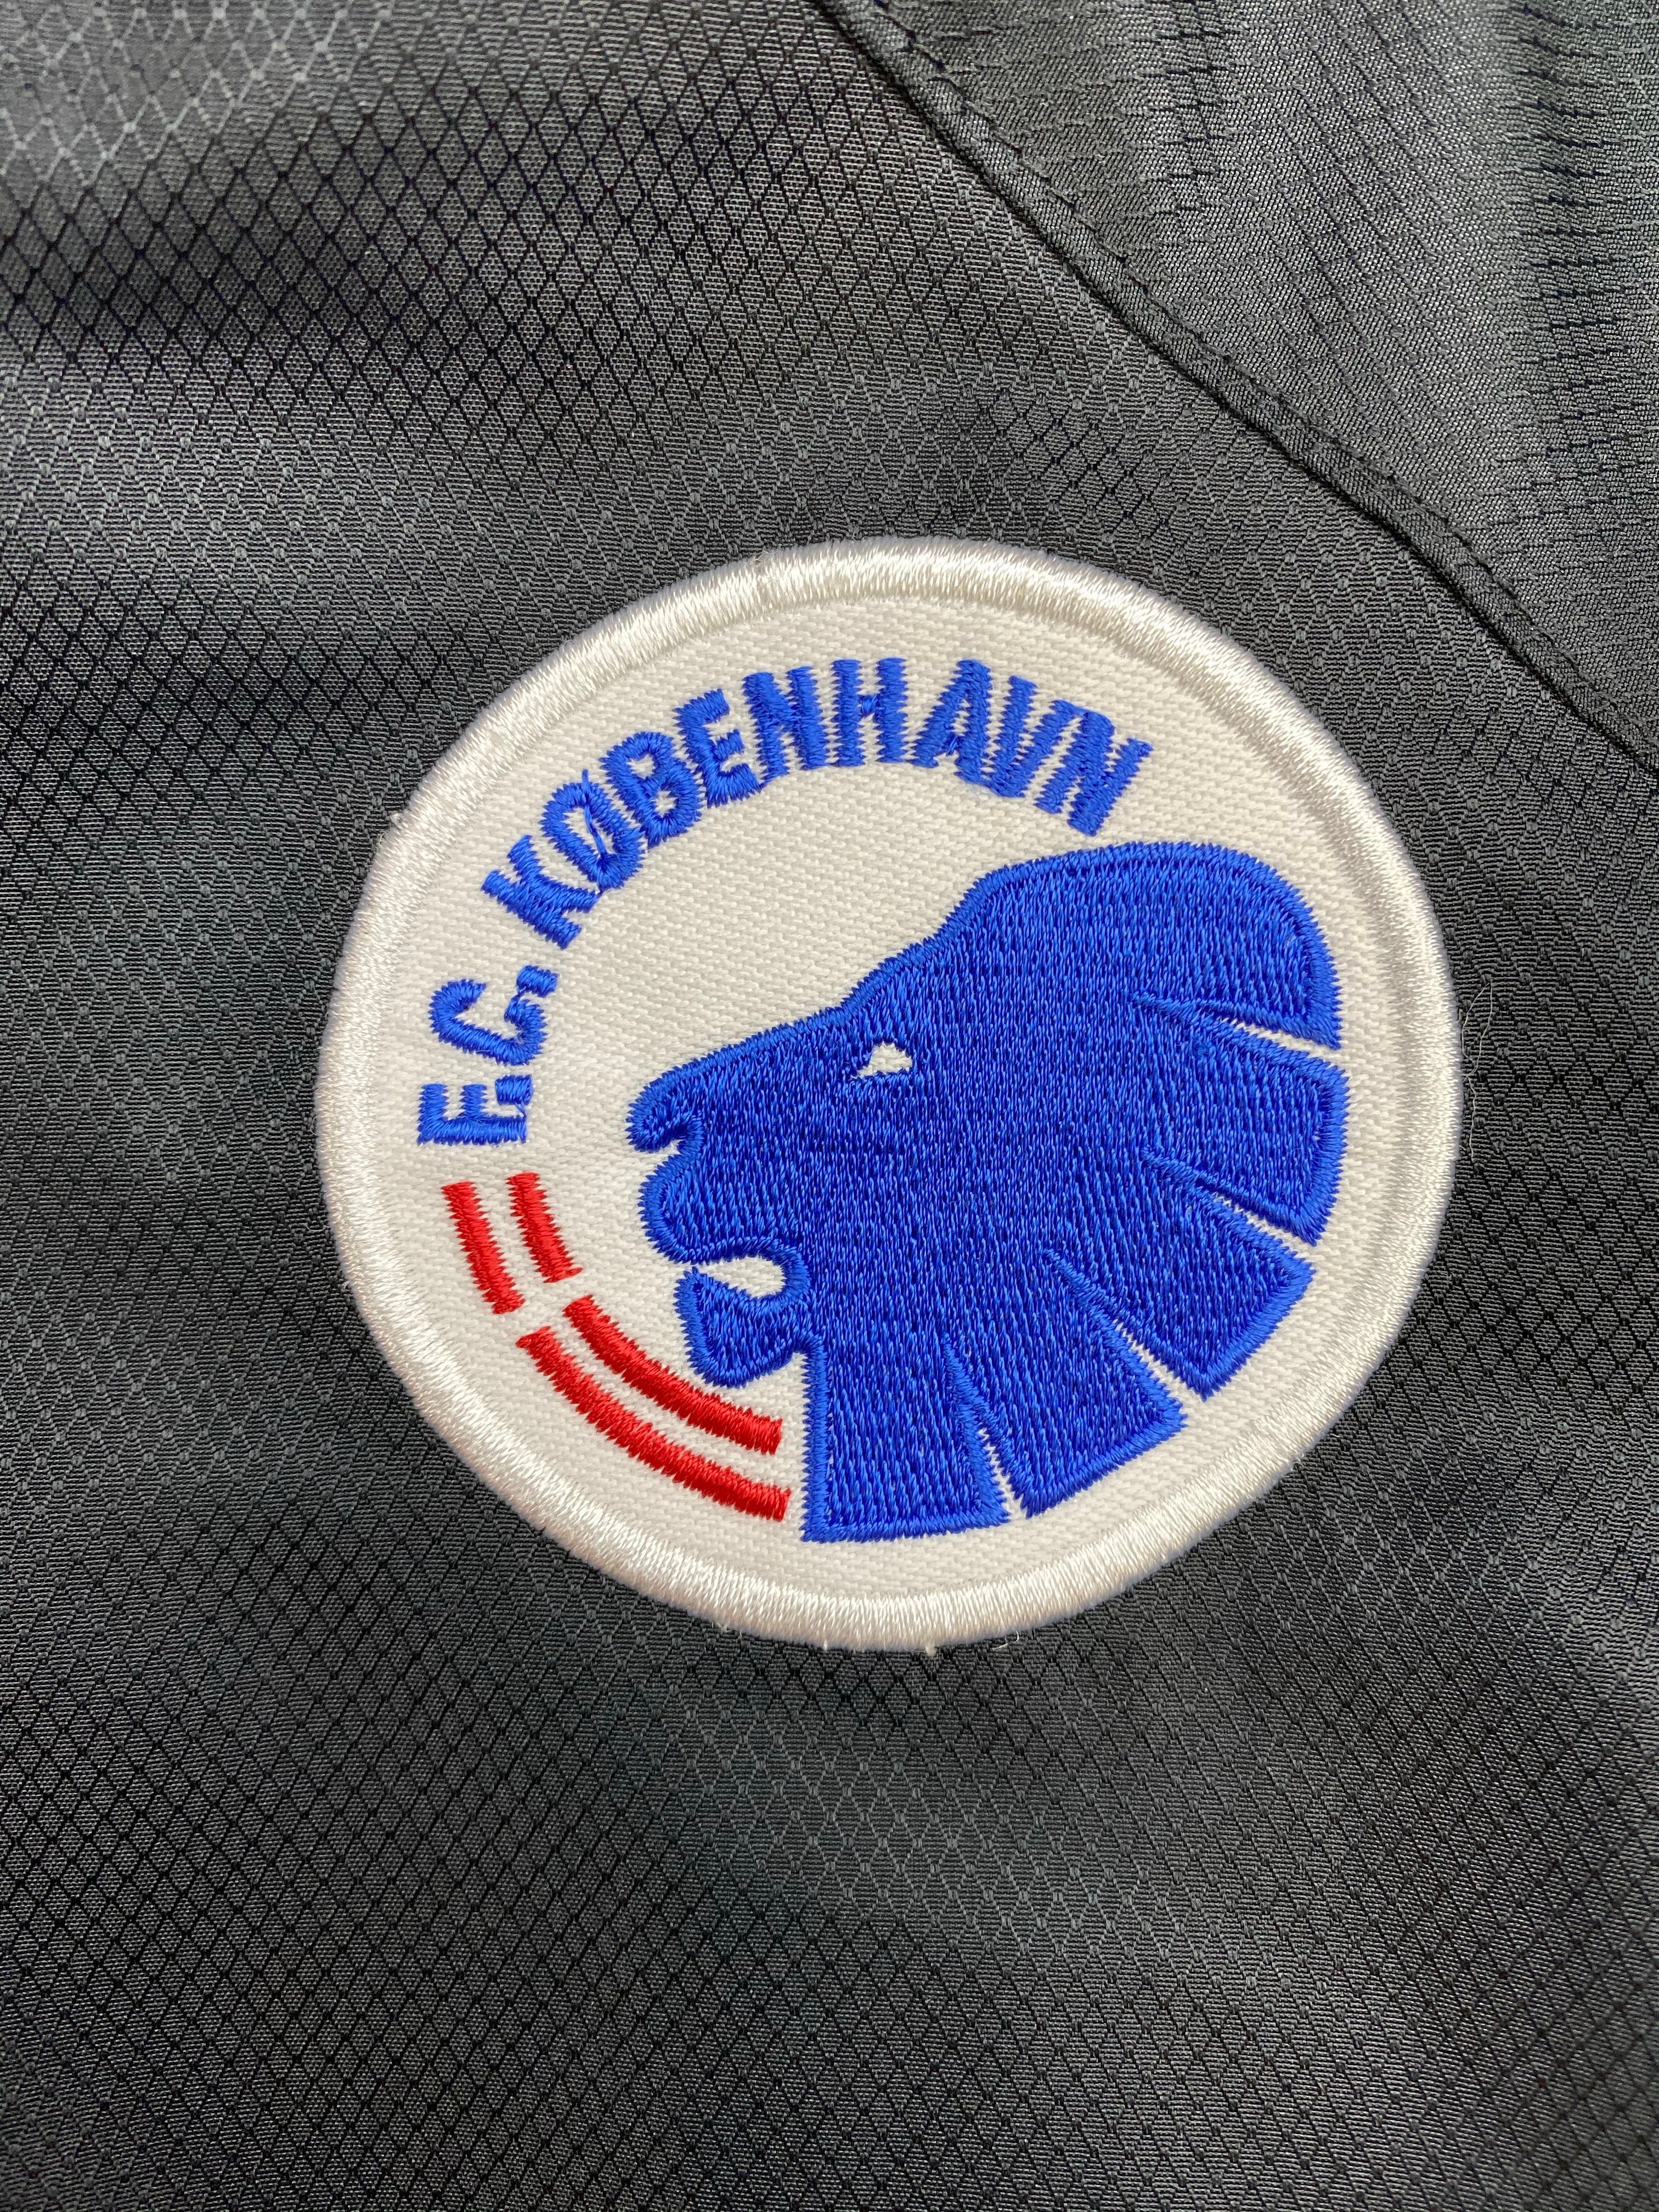 2006/07 FC Copenhagen Training Jacket (M) 9.5/10